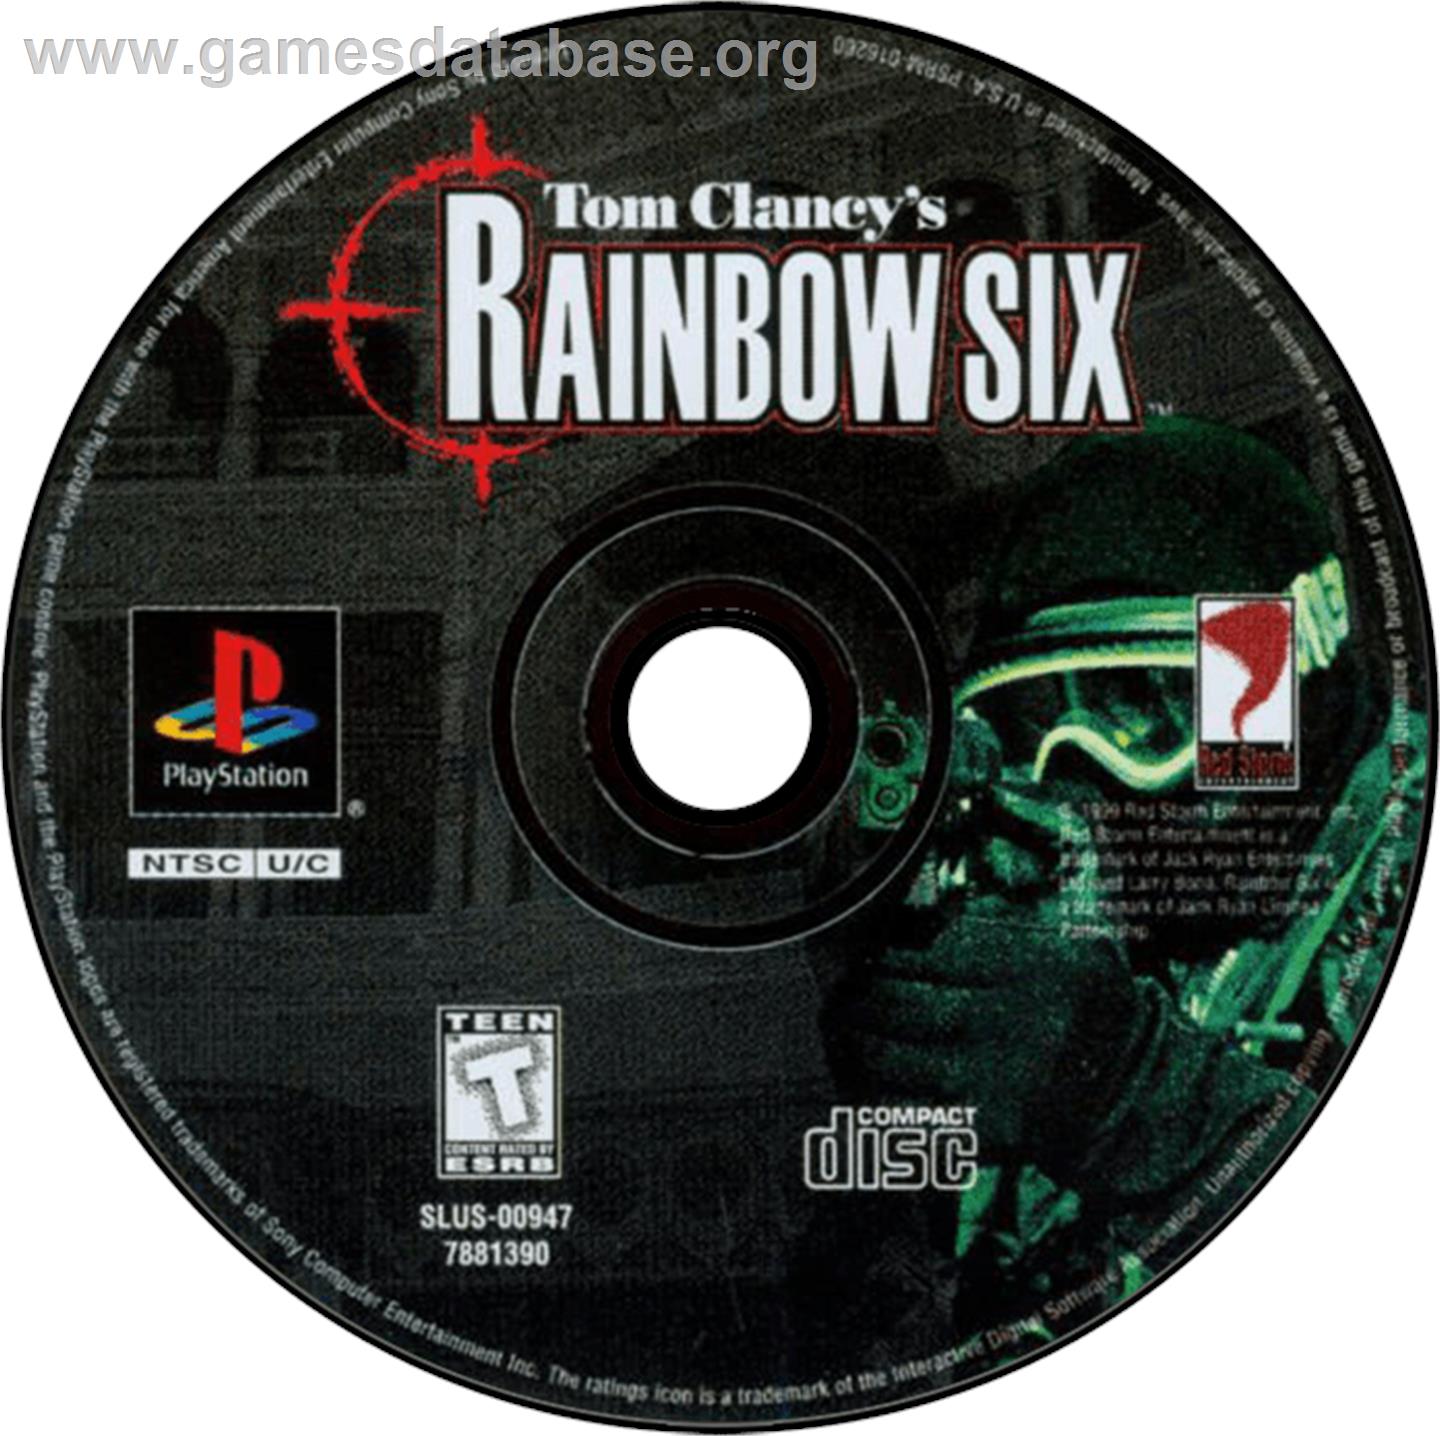 Tom Clancy's Rainbow Six - Sony Playstation - Artwork - Disc